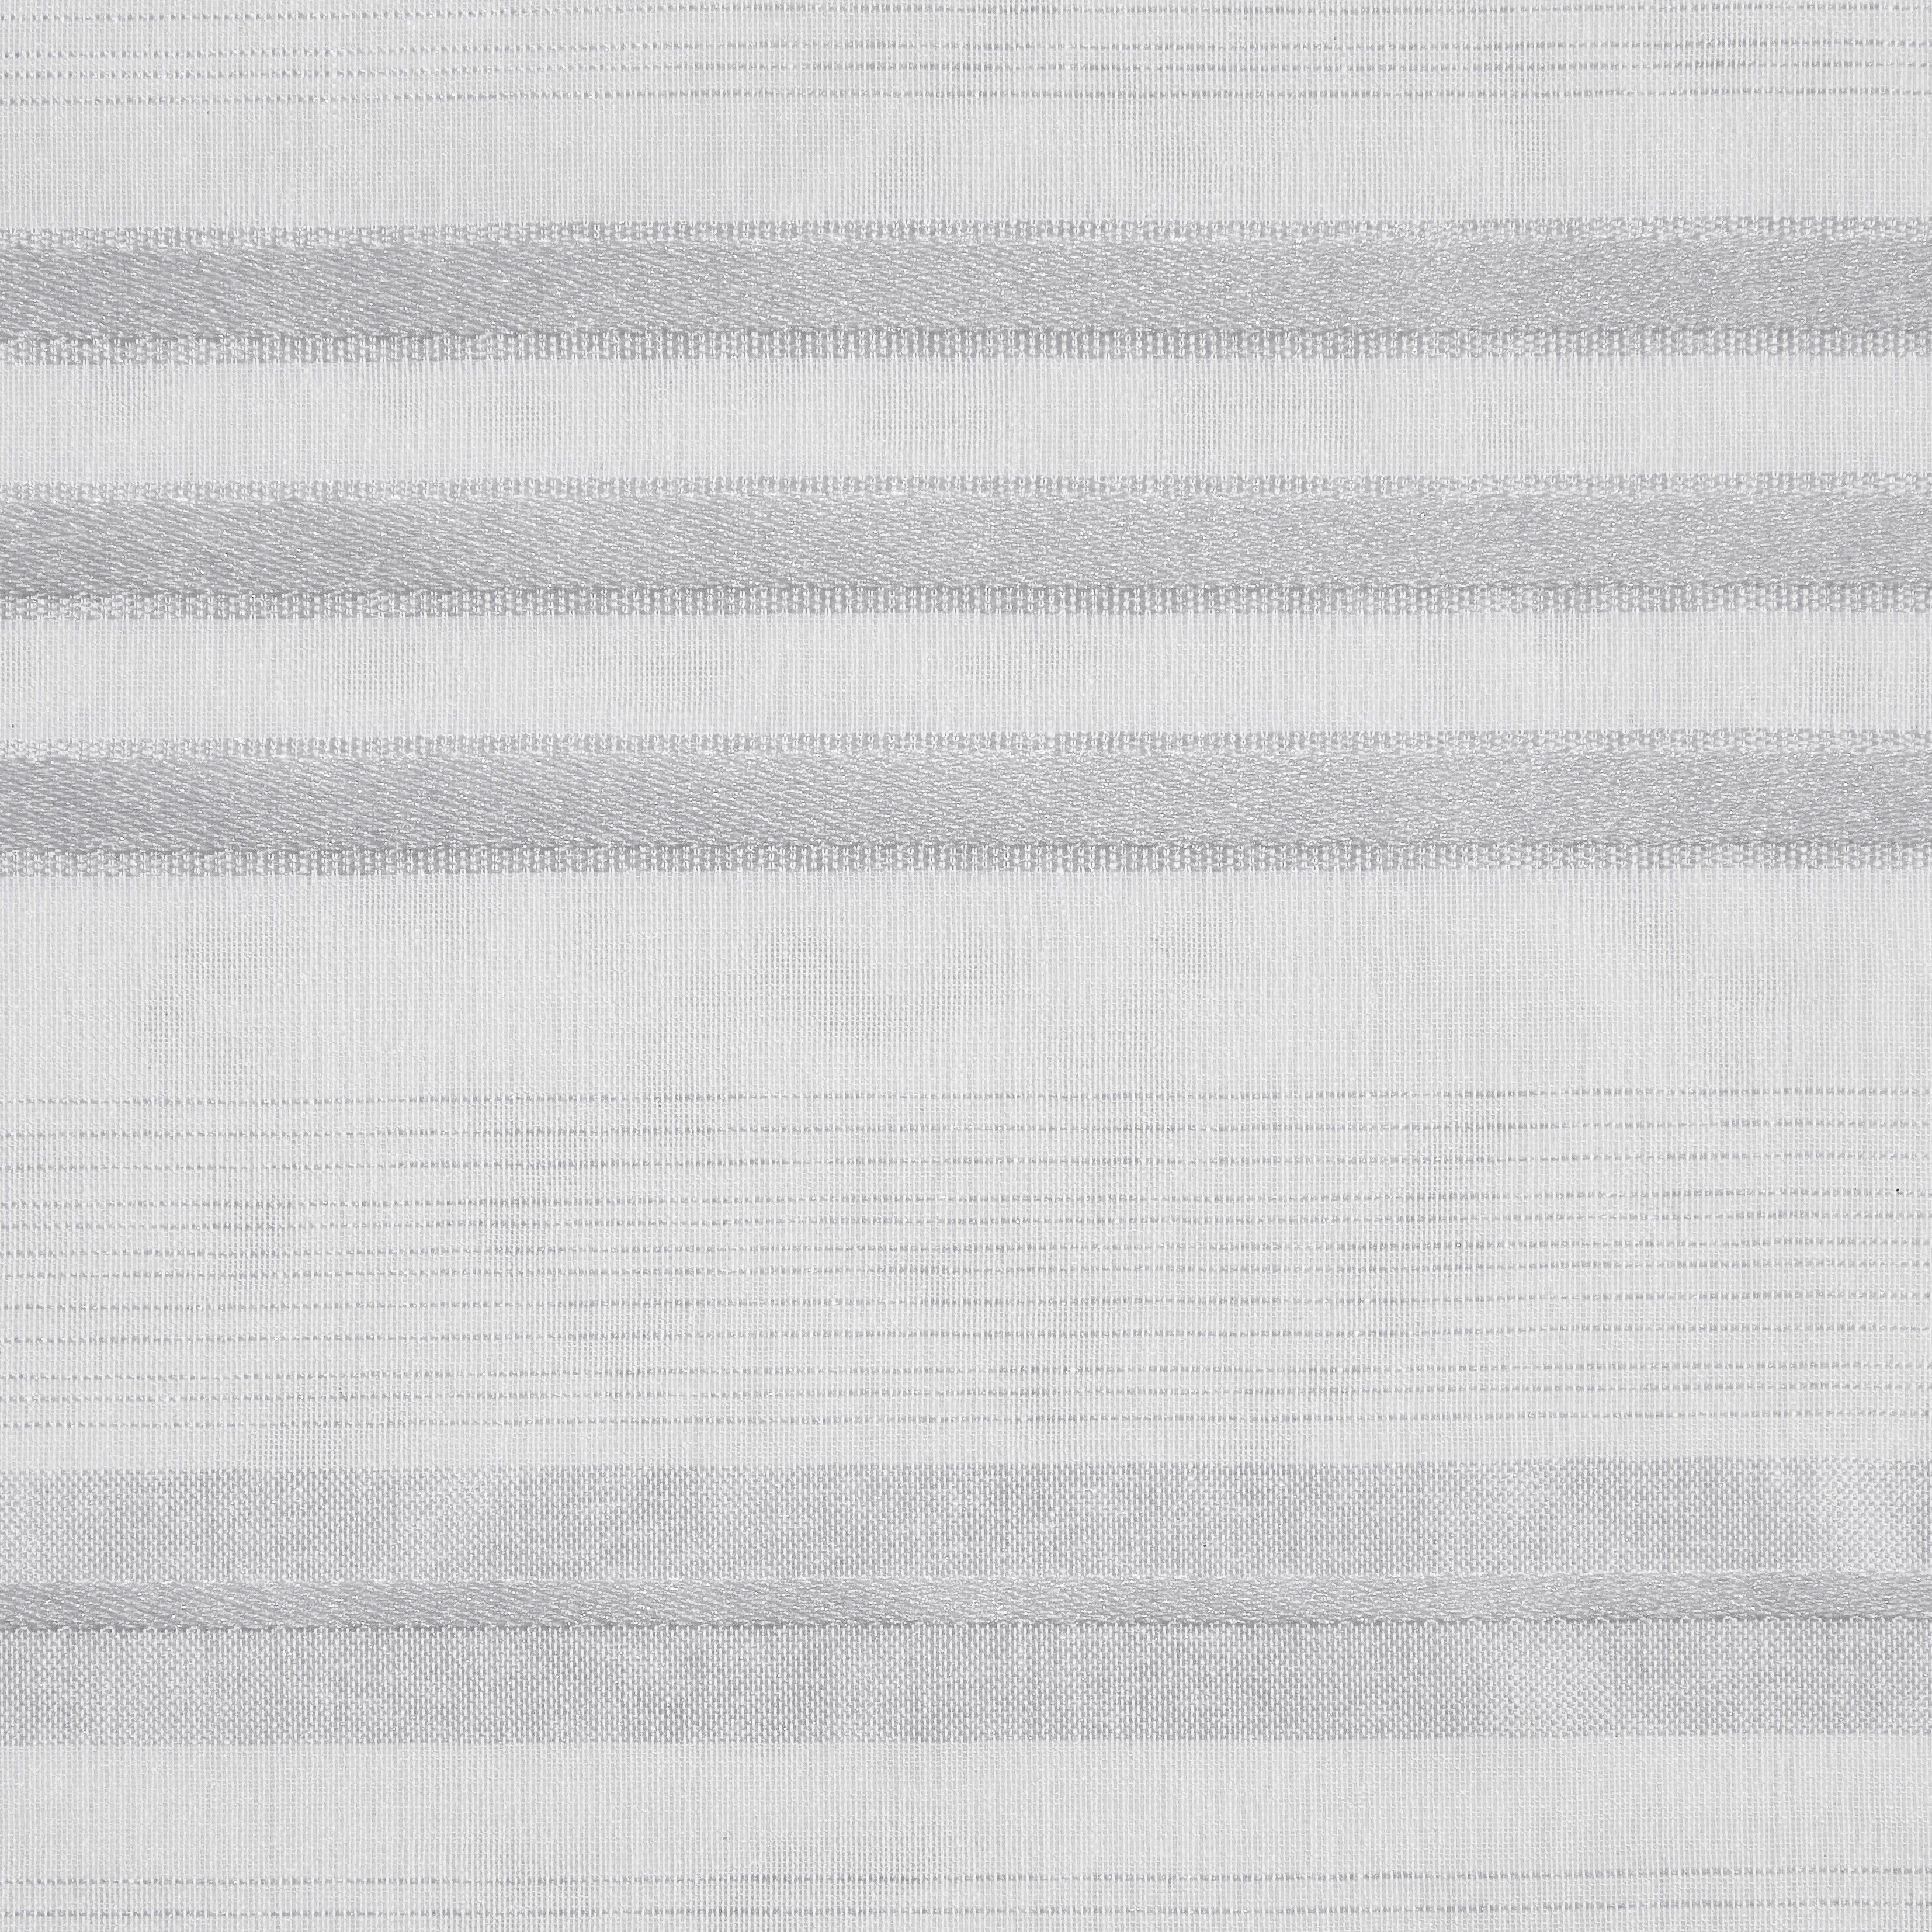 Bändchenrollo Palma weiß B/L: ca. 120x135 cm Palma - weiß (120,00/135,00cm)